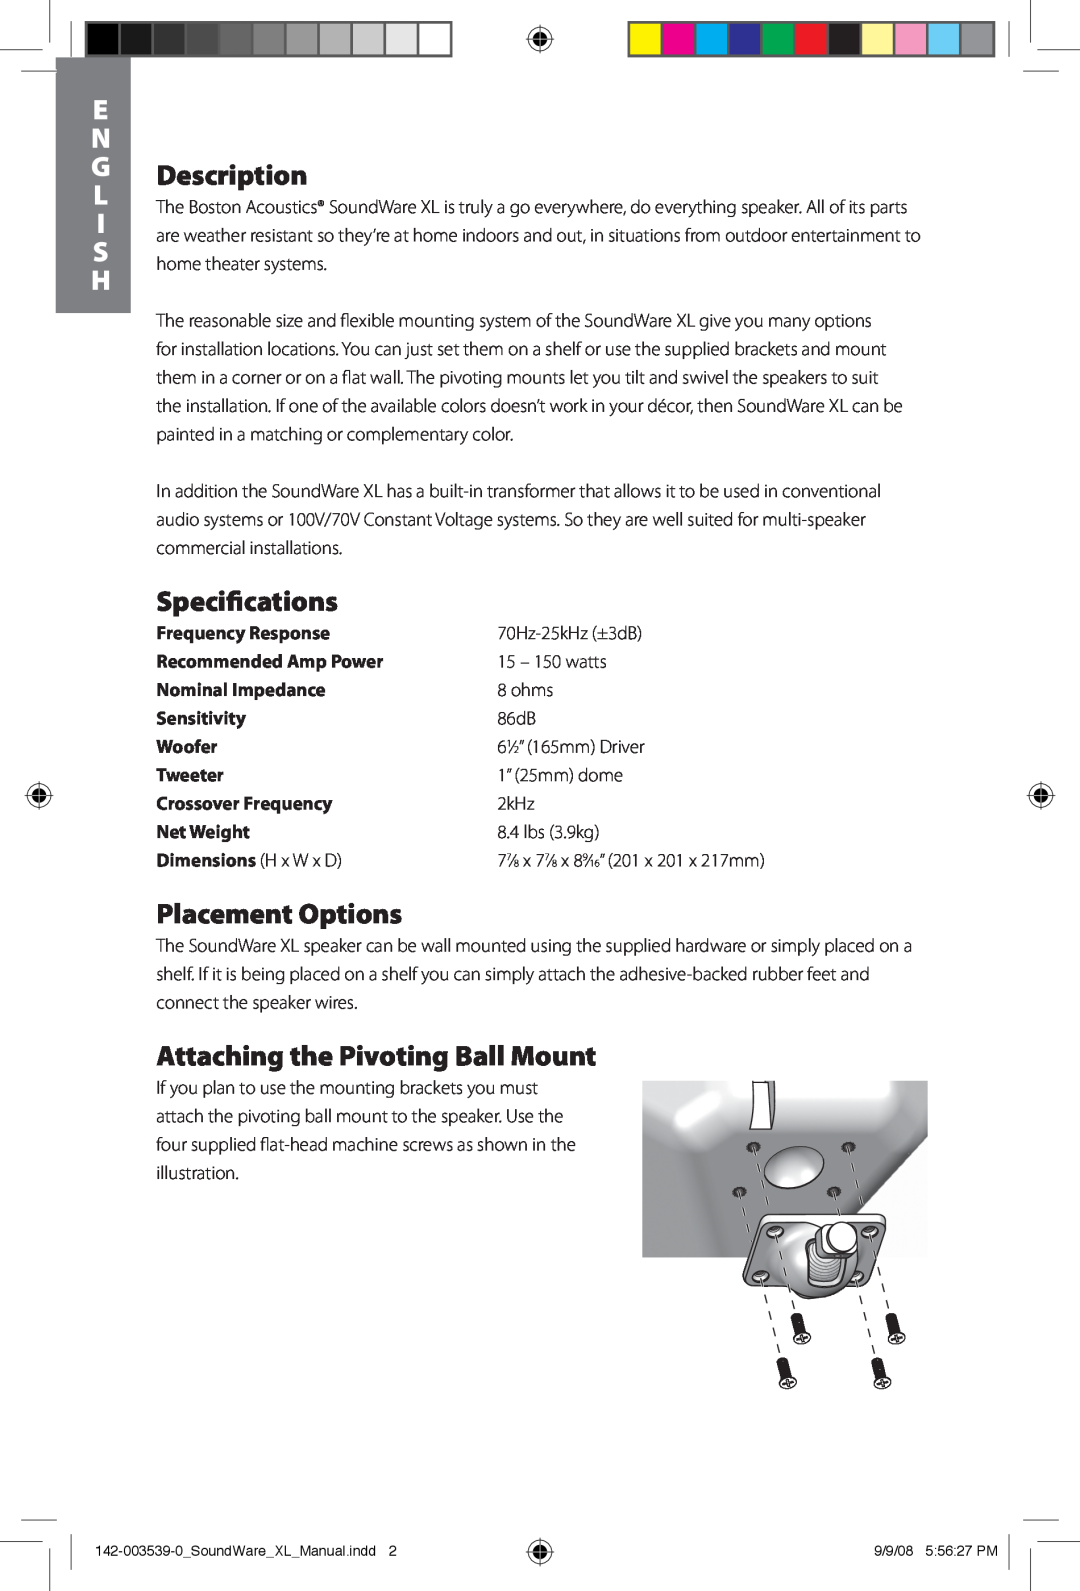 Boston Acoustics SoundWare XL Description, Specifications, Placement Options, Attaching the Pivoting Ball Mount, Woofer 